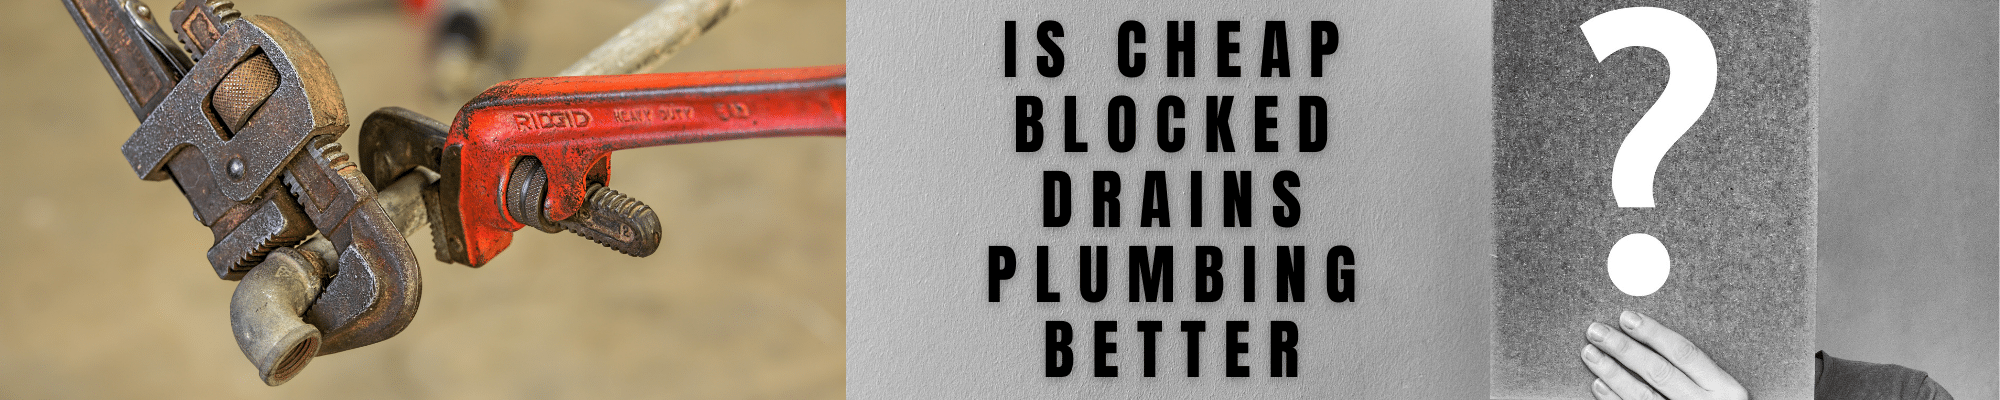 Is Cheap Blocked Drains Plumbing Better